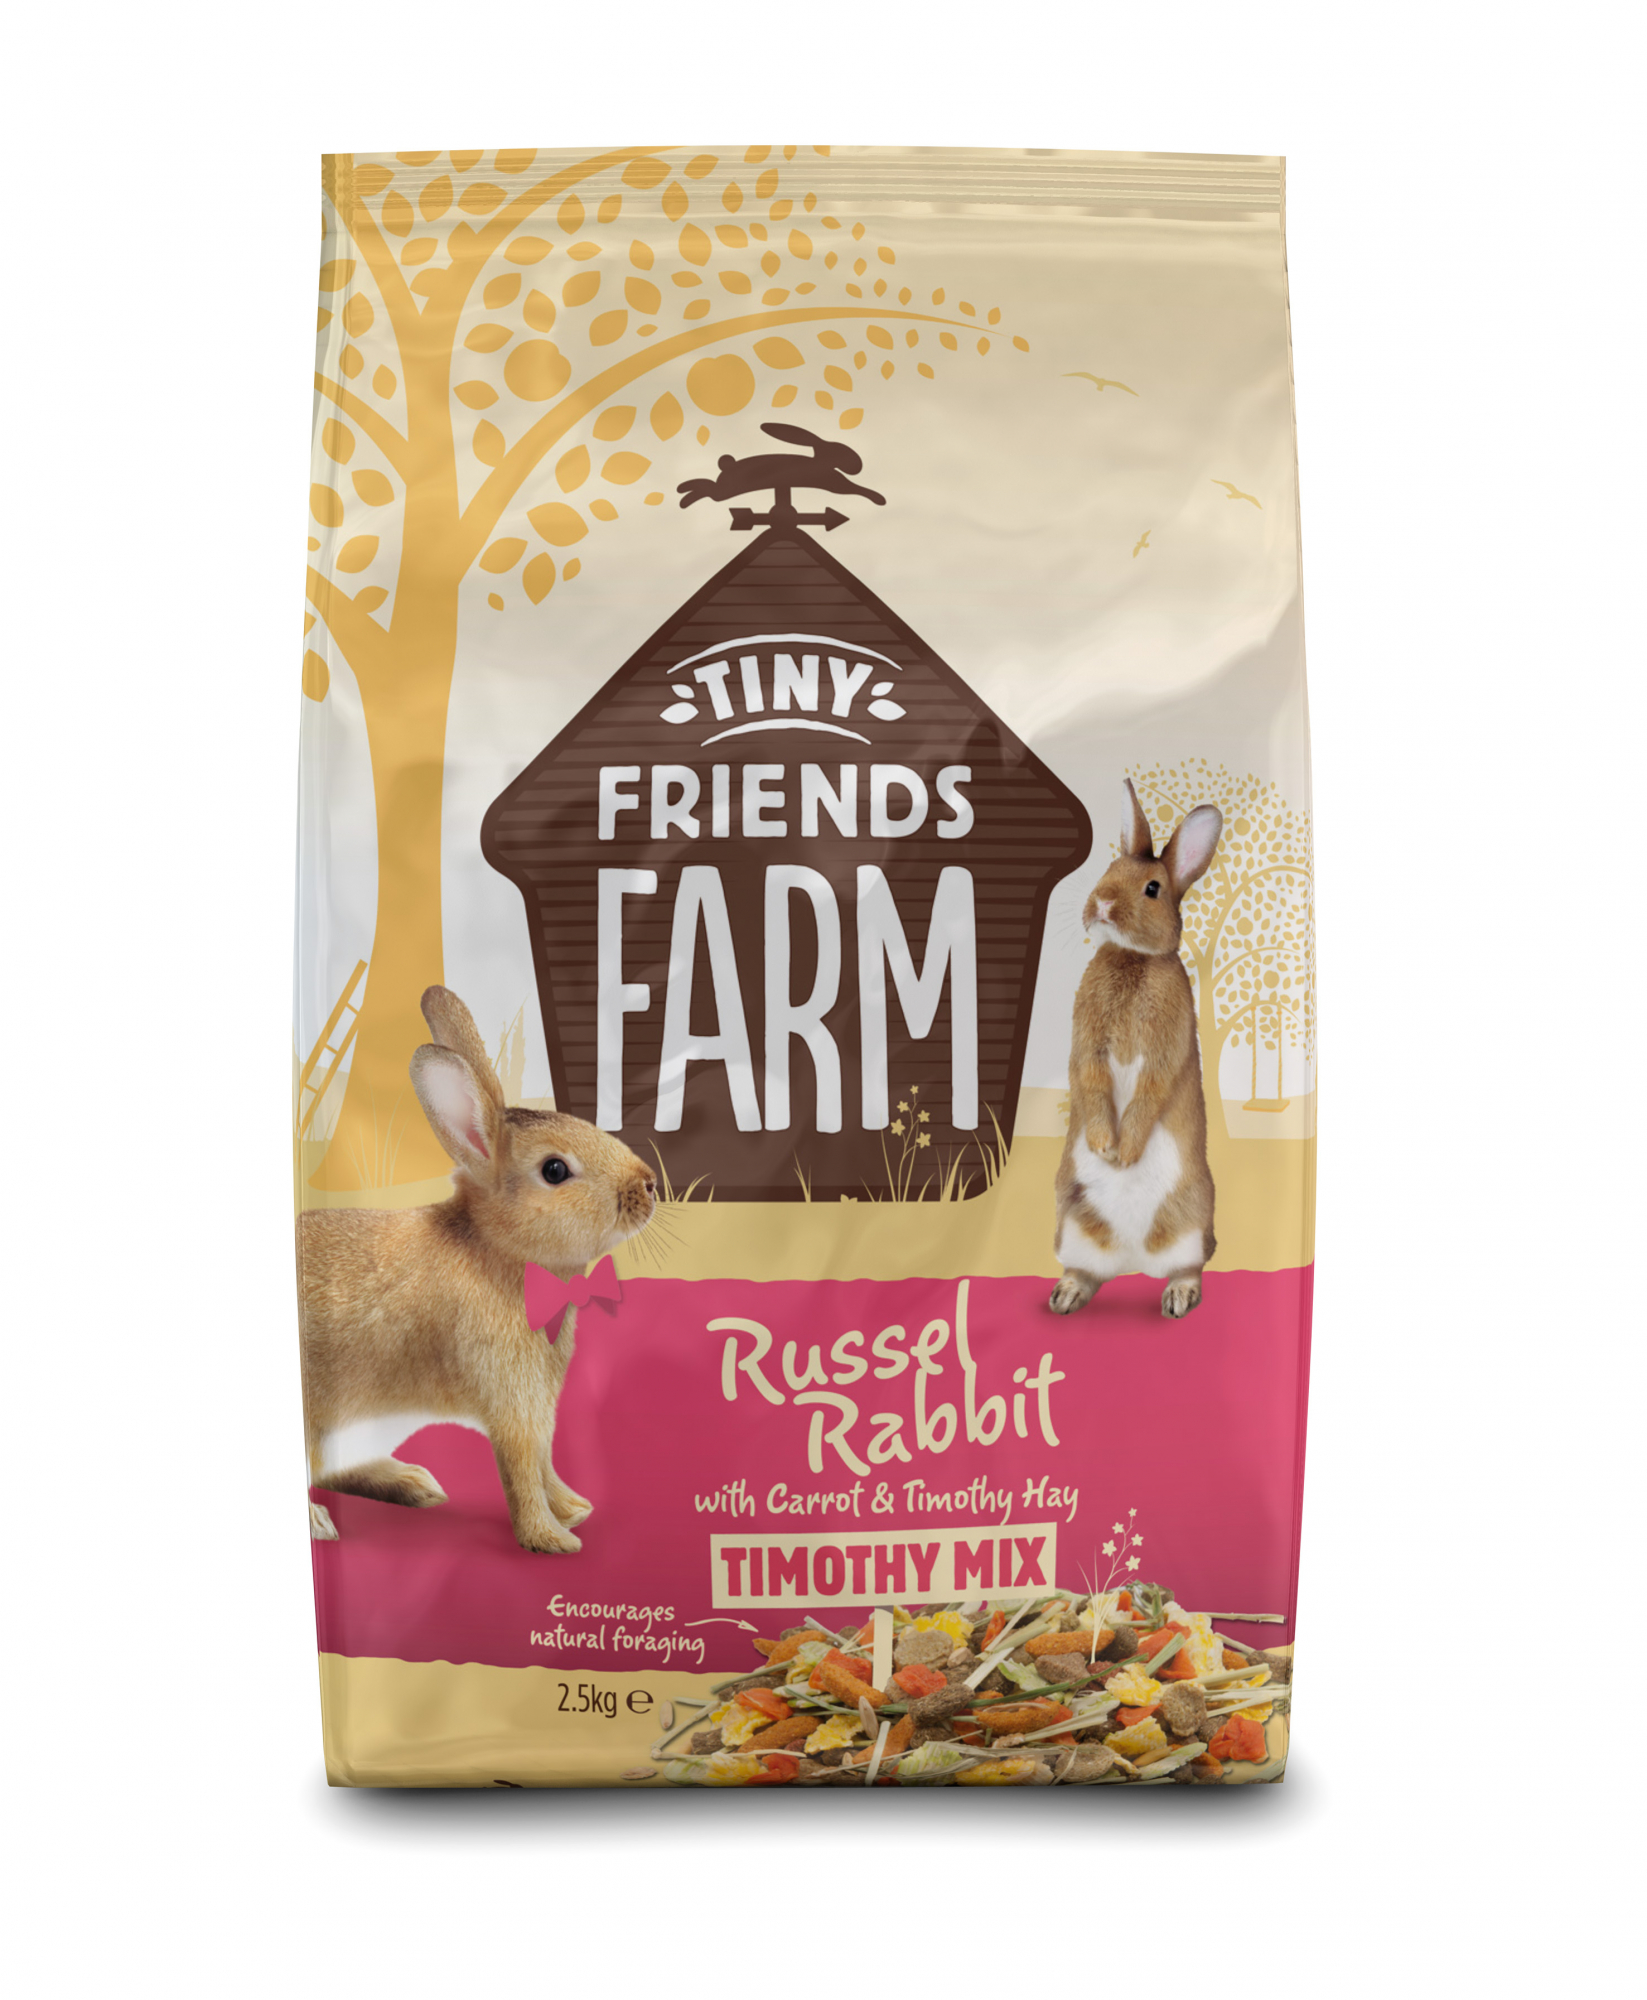 Tiny Friends Farm Russel Rabbit Timothy Mix